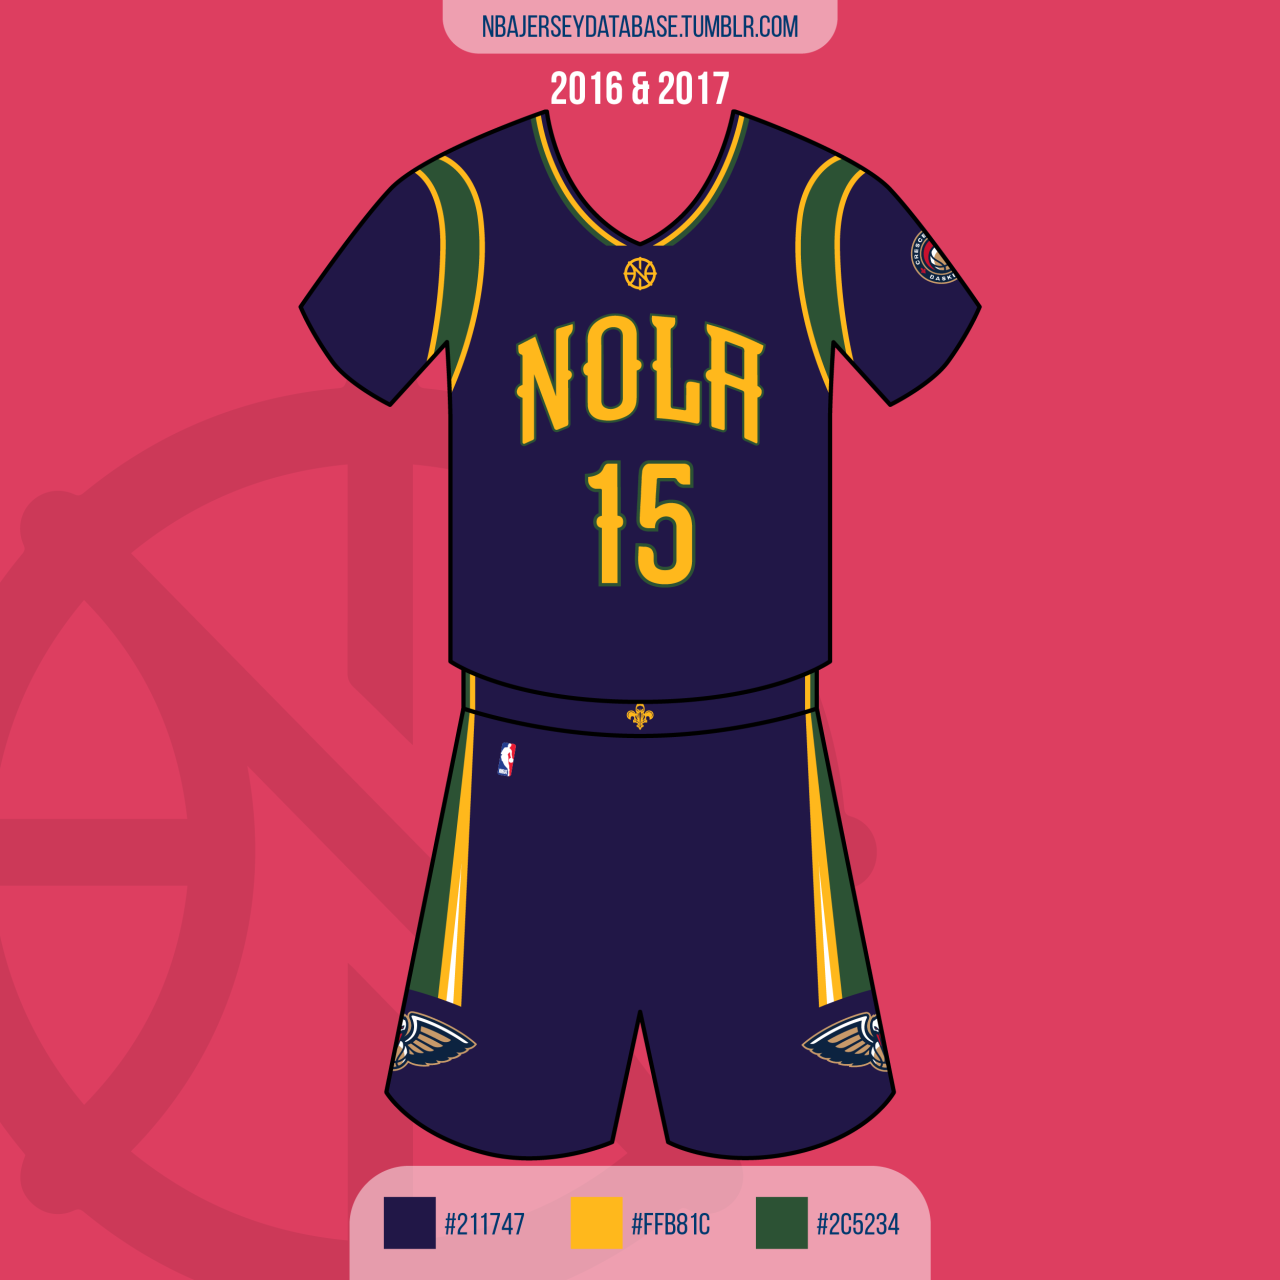 NBA Jersey Database, New Orleans Pelicans Pride Jersey 2016 & 2017